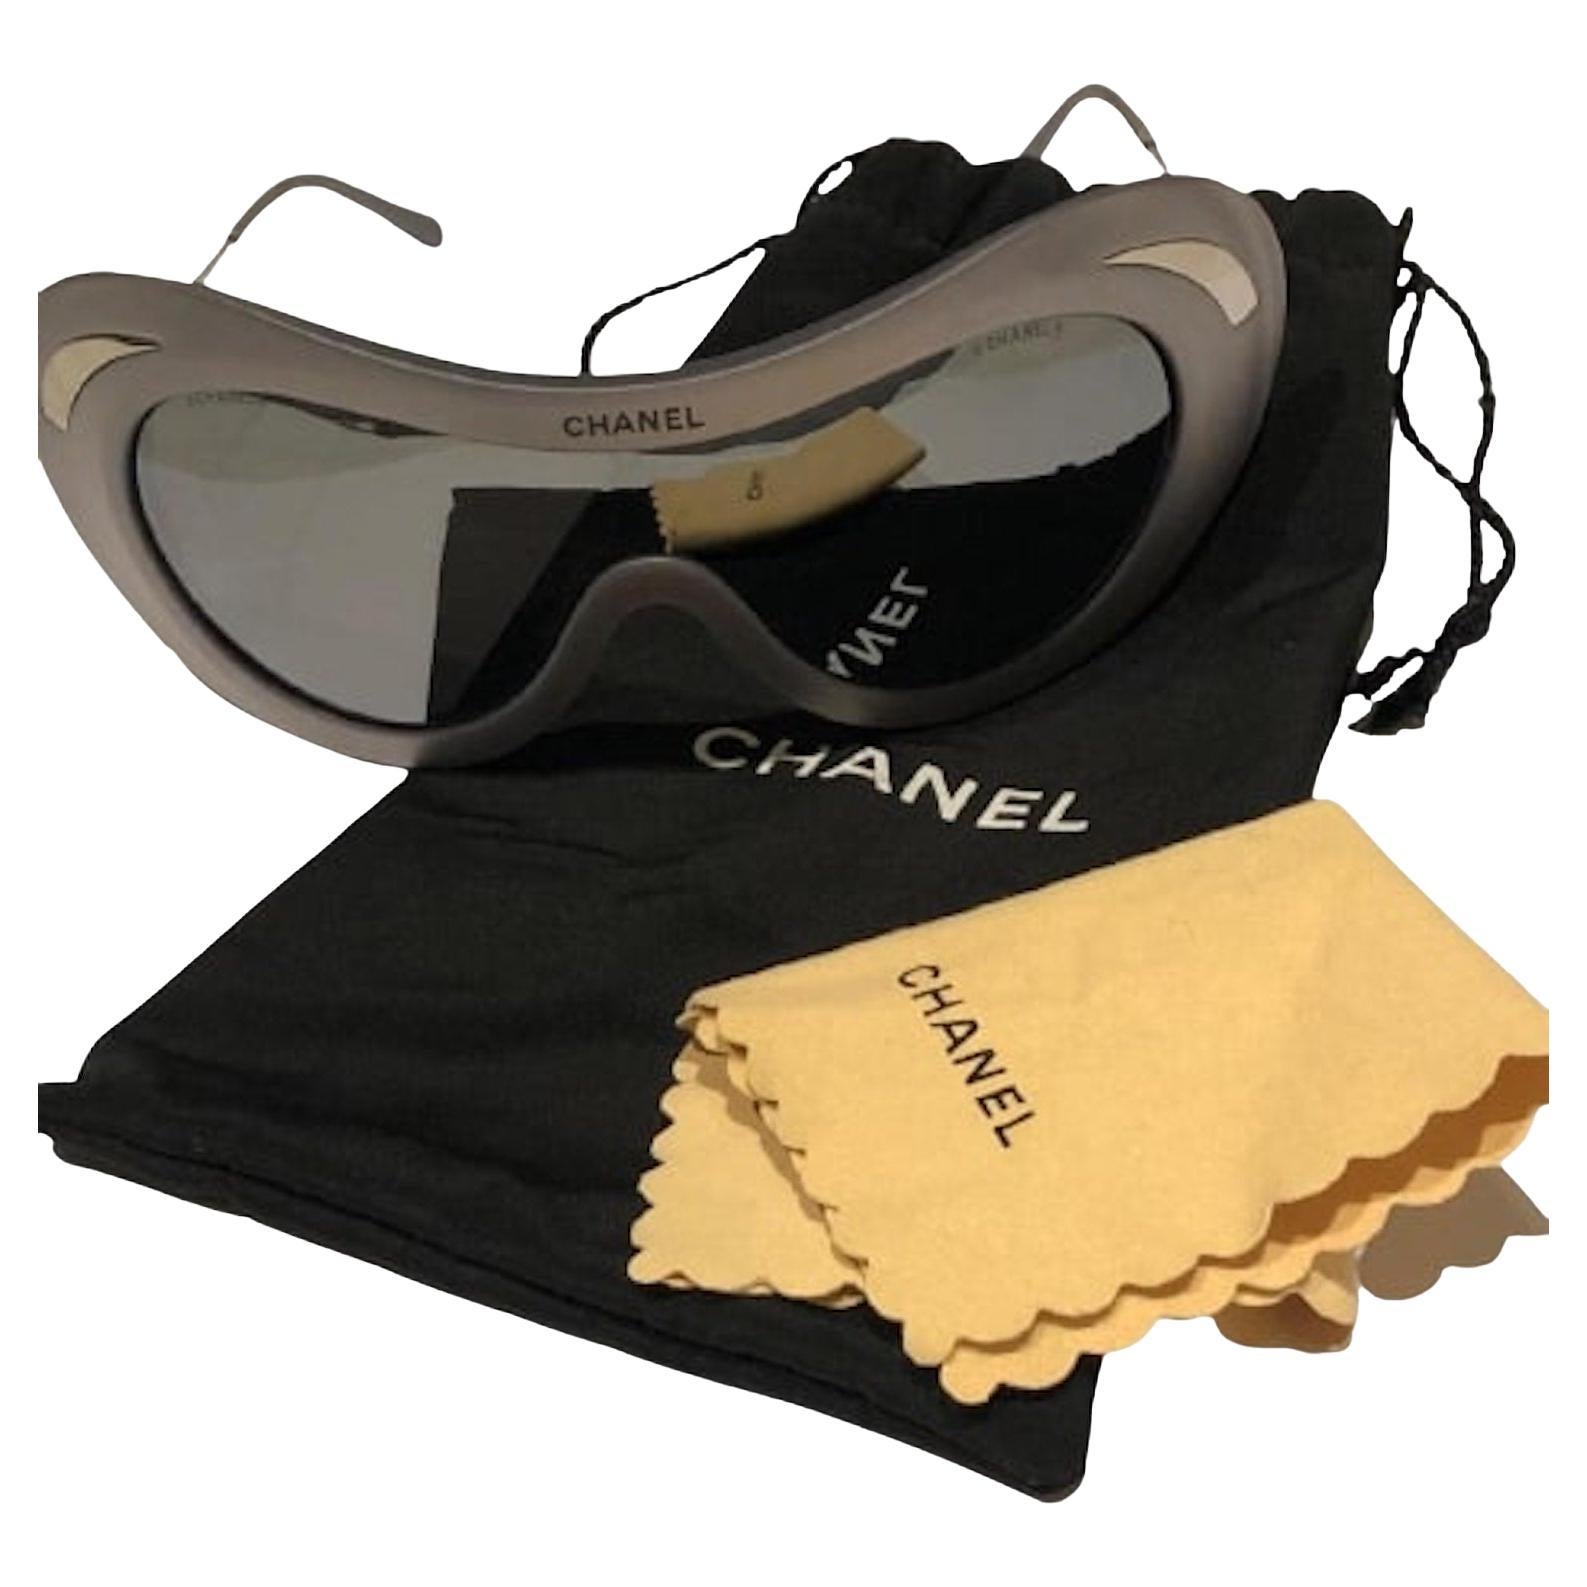 Chanel Ski - 14 For Sale on 1stDibs